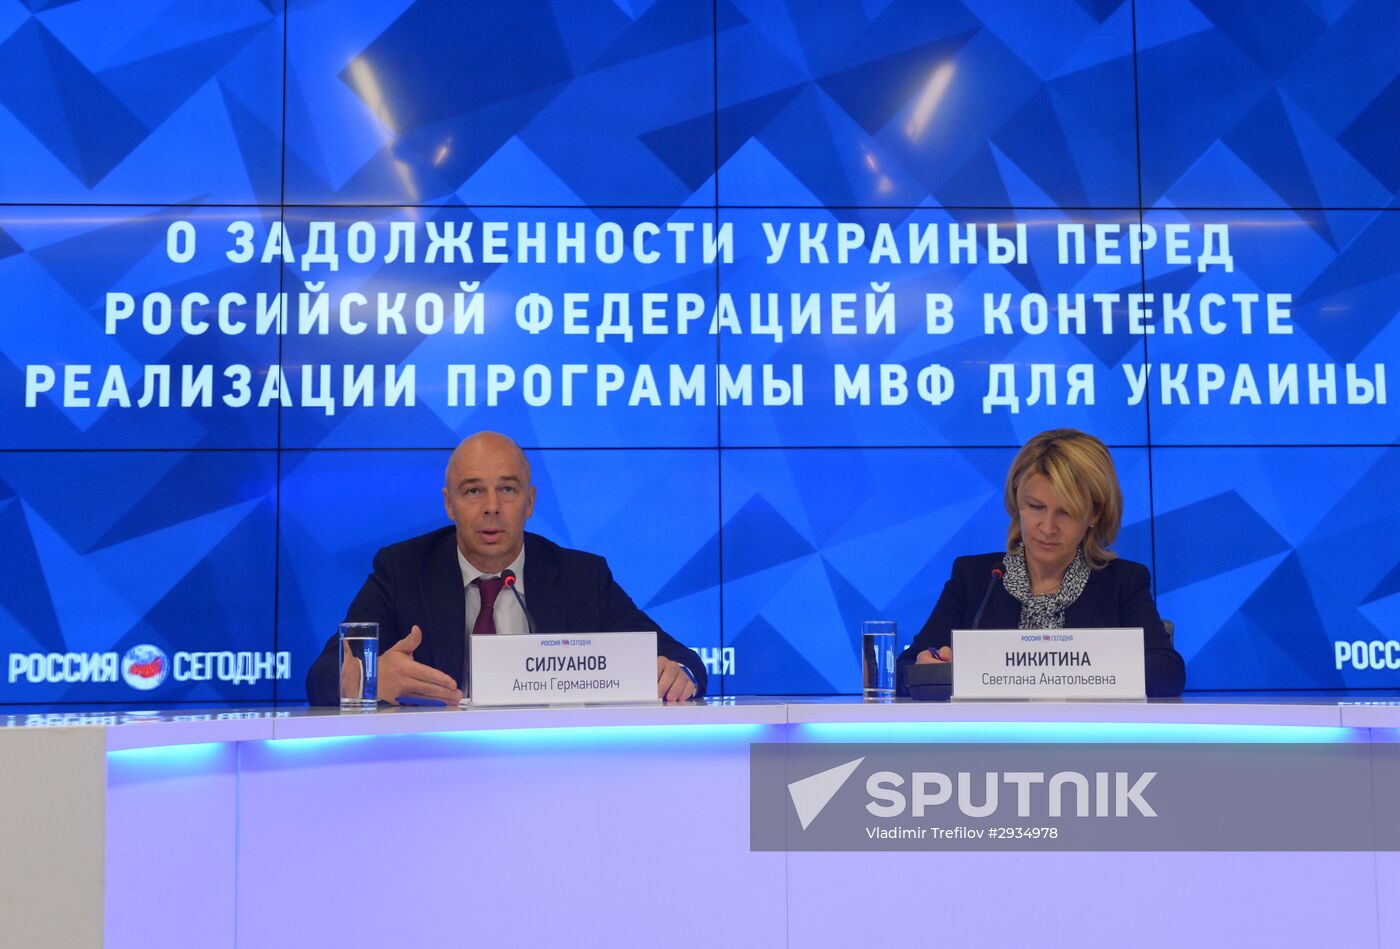 Briefing by Finance Minister Anton Siluanov